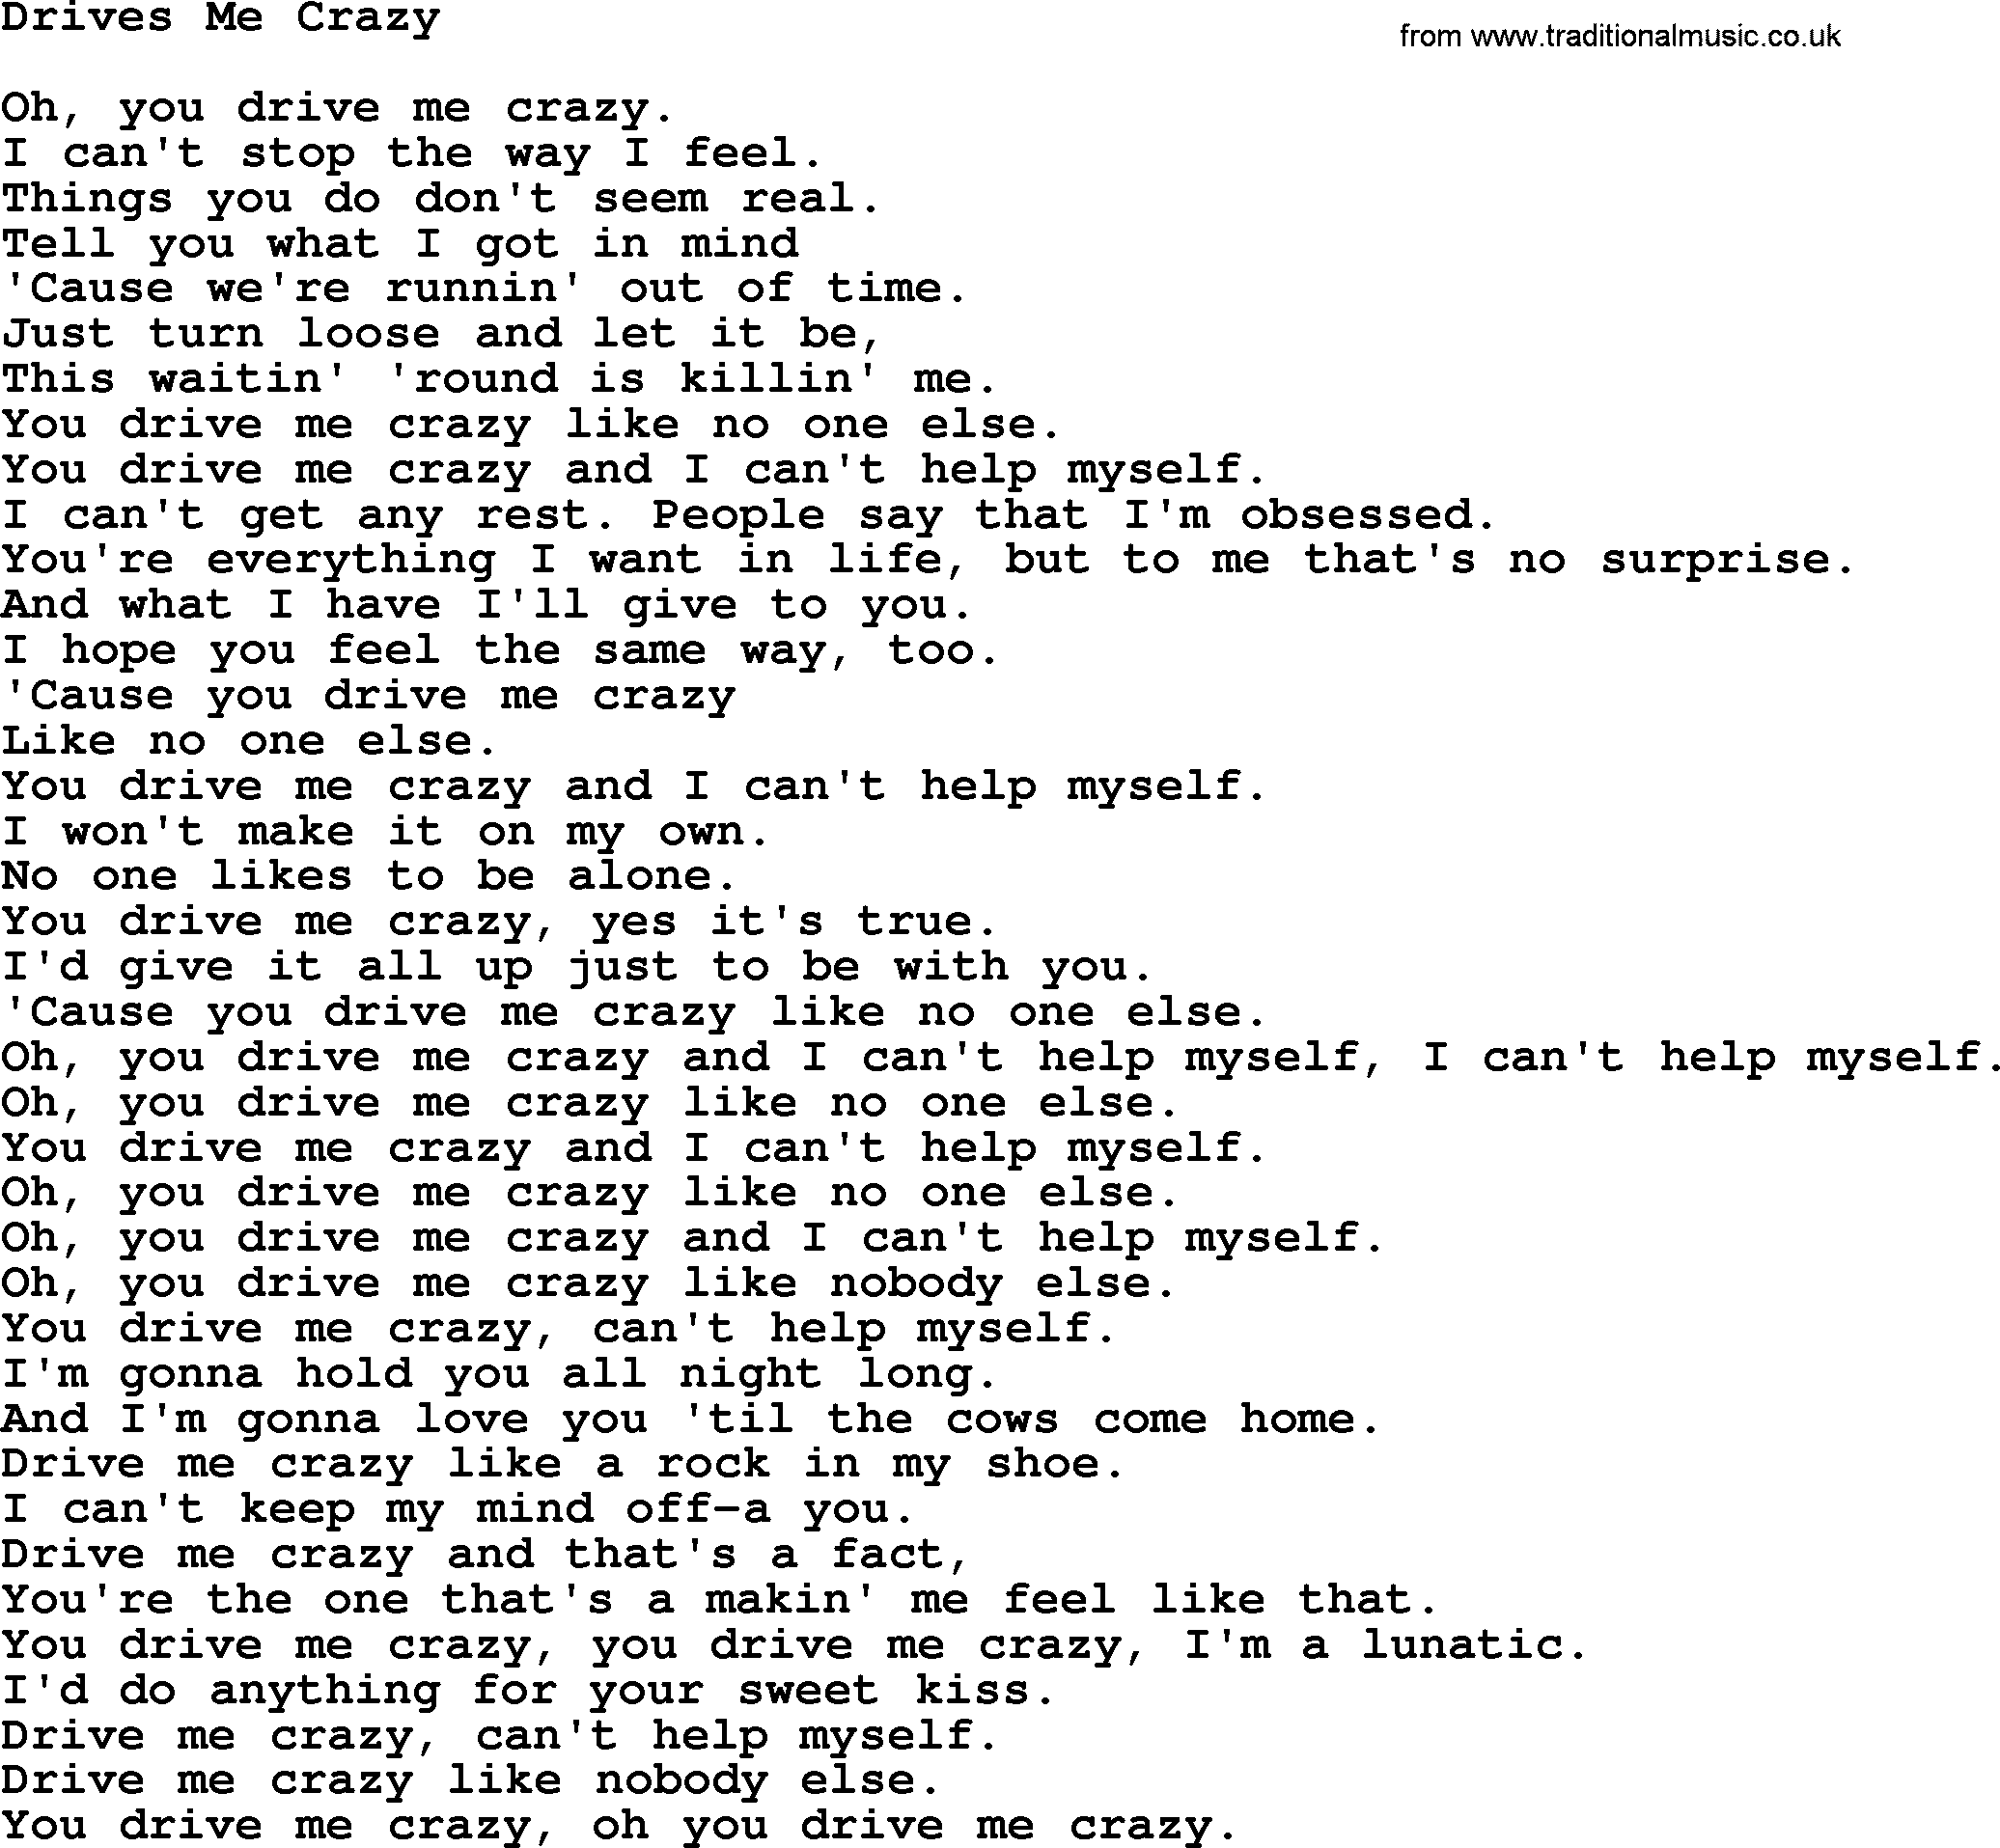 Dolly Parton song: Drives Me Crazy, lyrics